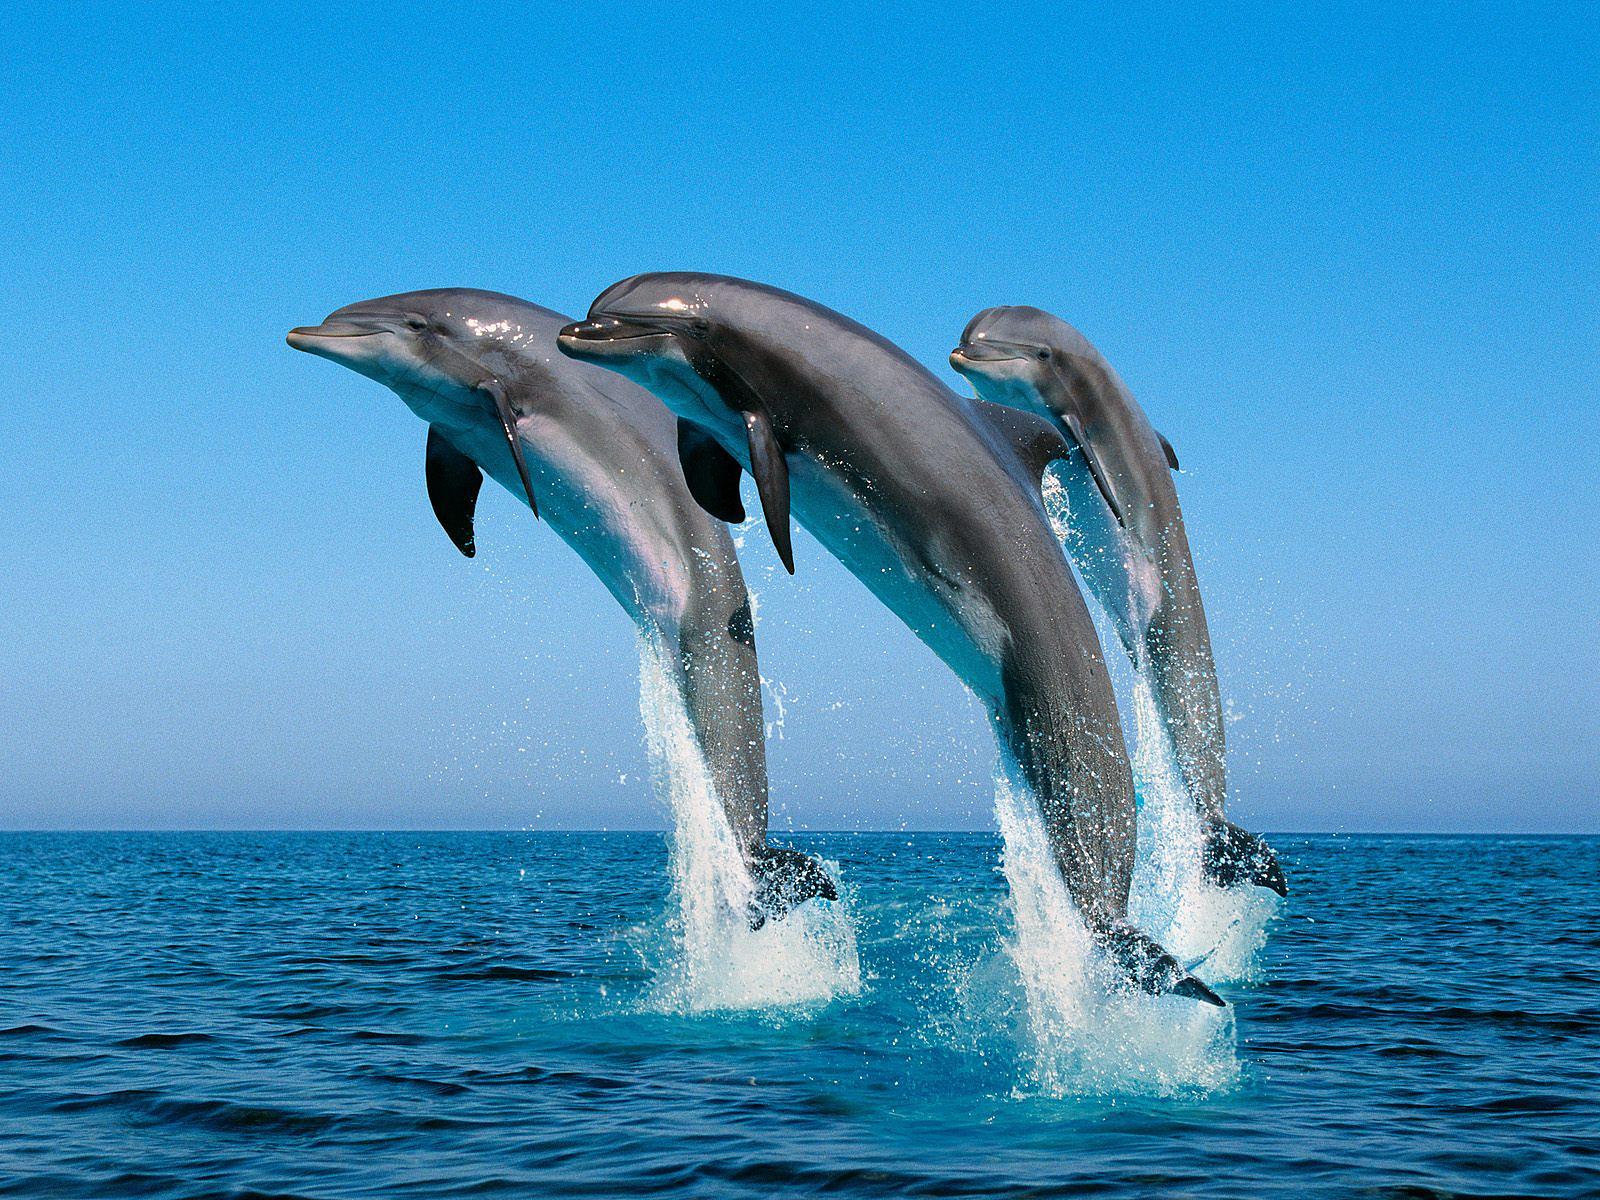 http://1.bp.blogspot.com/-rQkvR0FkPbk/TVgPUUpyDKI/AAAAAAAAAqw/pDoq6sPfI1U/s1600/Jumping_Bottlenose_Dolphins.jpg